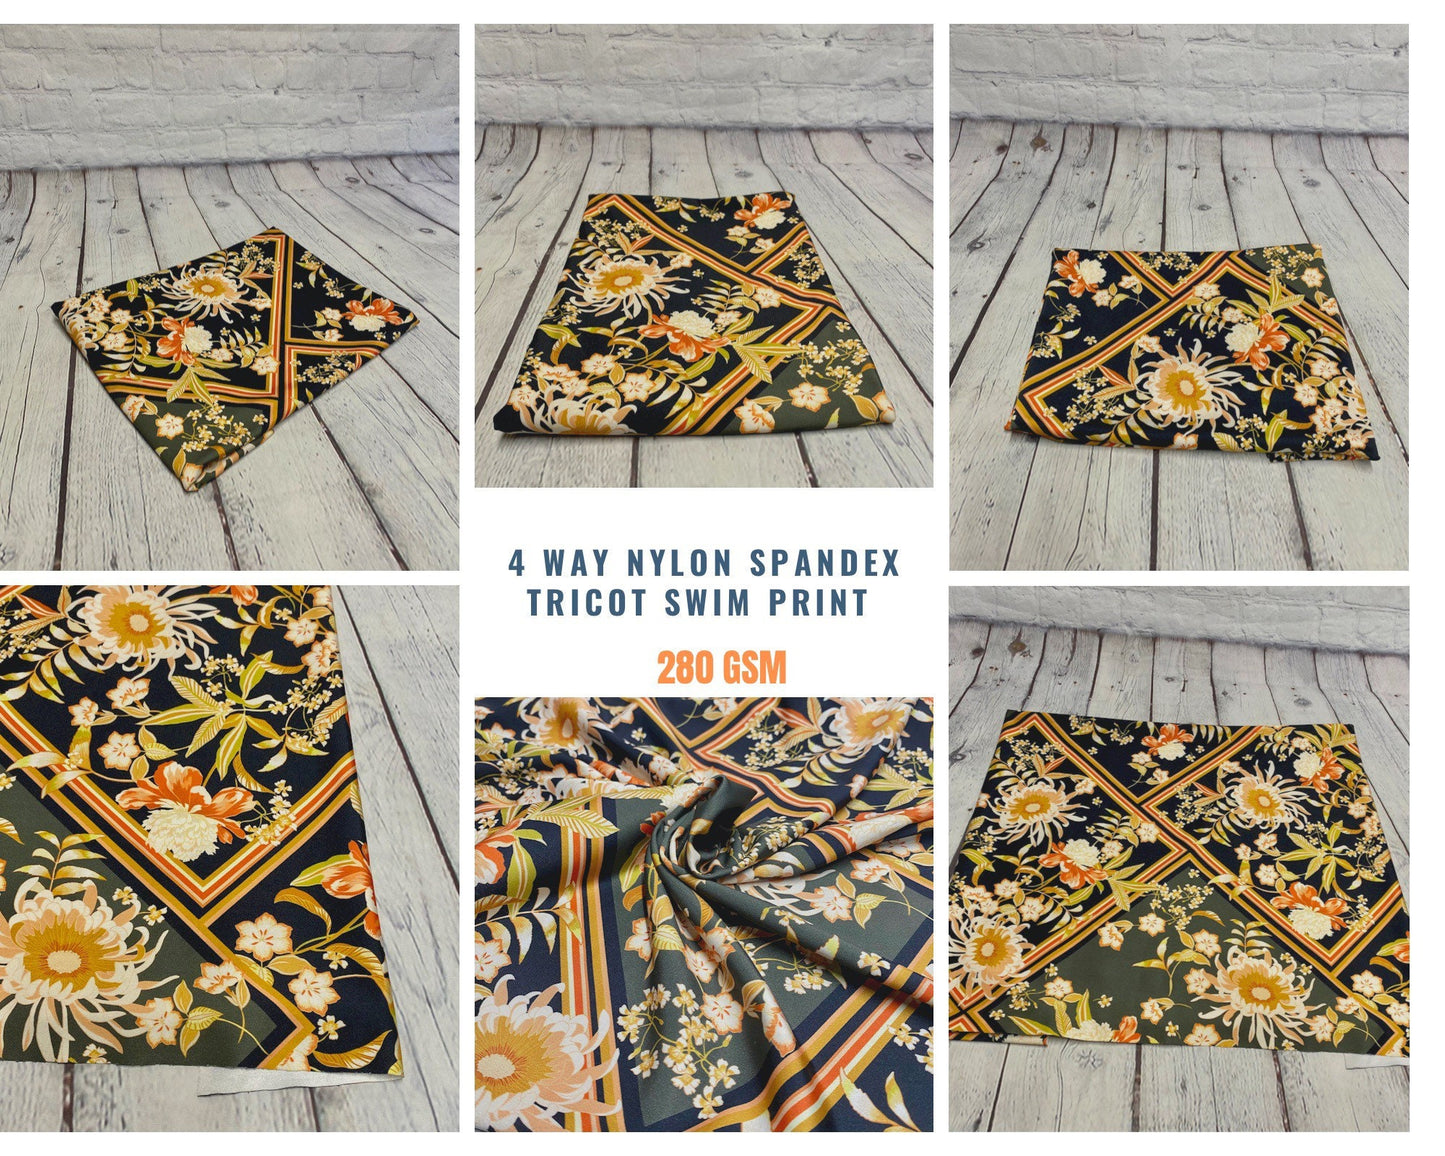 4 Way Stretch Assorted Print Nylon Spandex Fabric By The Yard Tricot Swim Wear Bikini Active Wear Geometric Abstract Floral Print 280 GSM